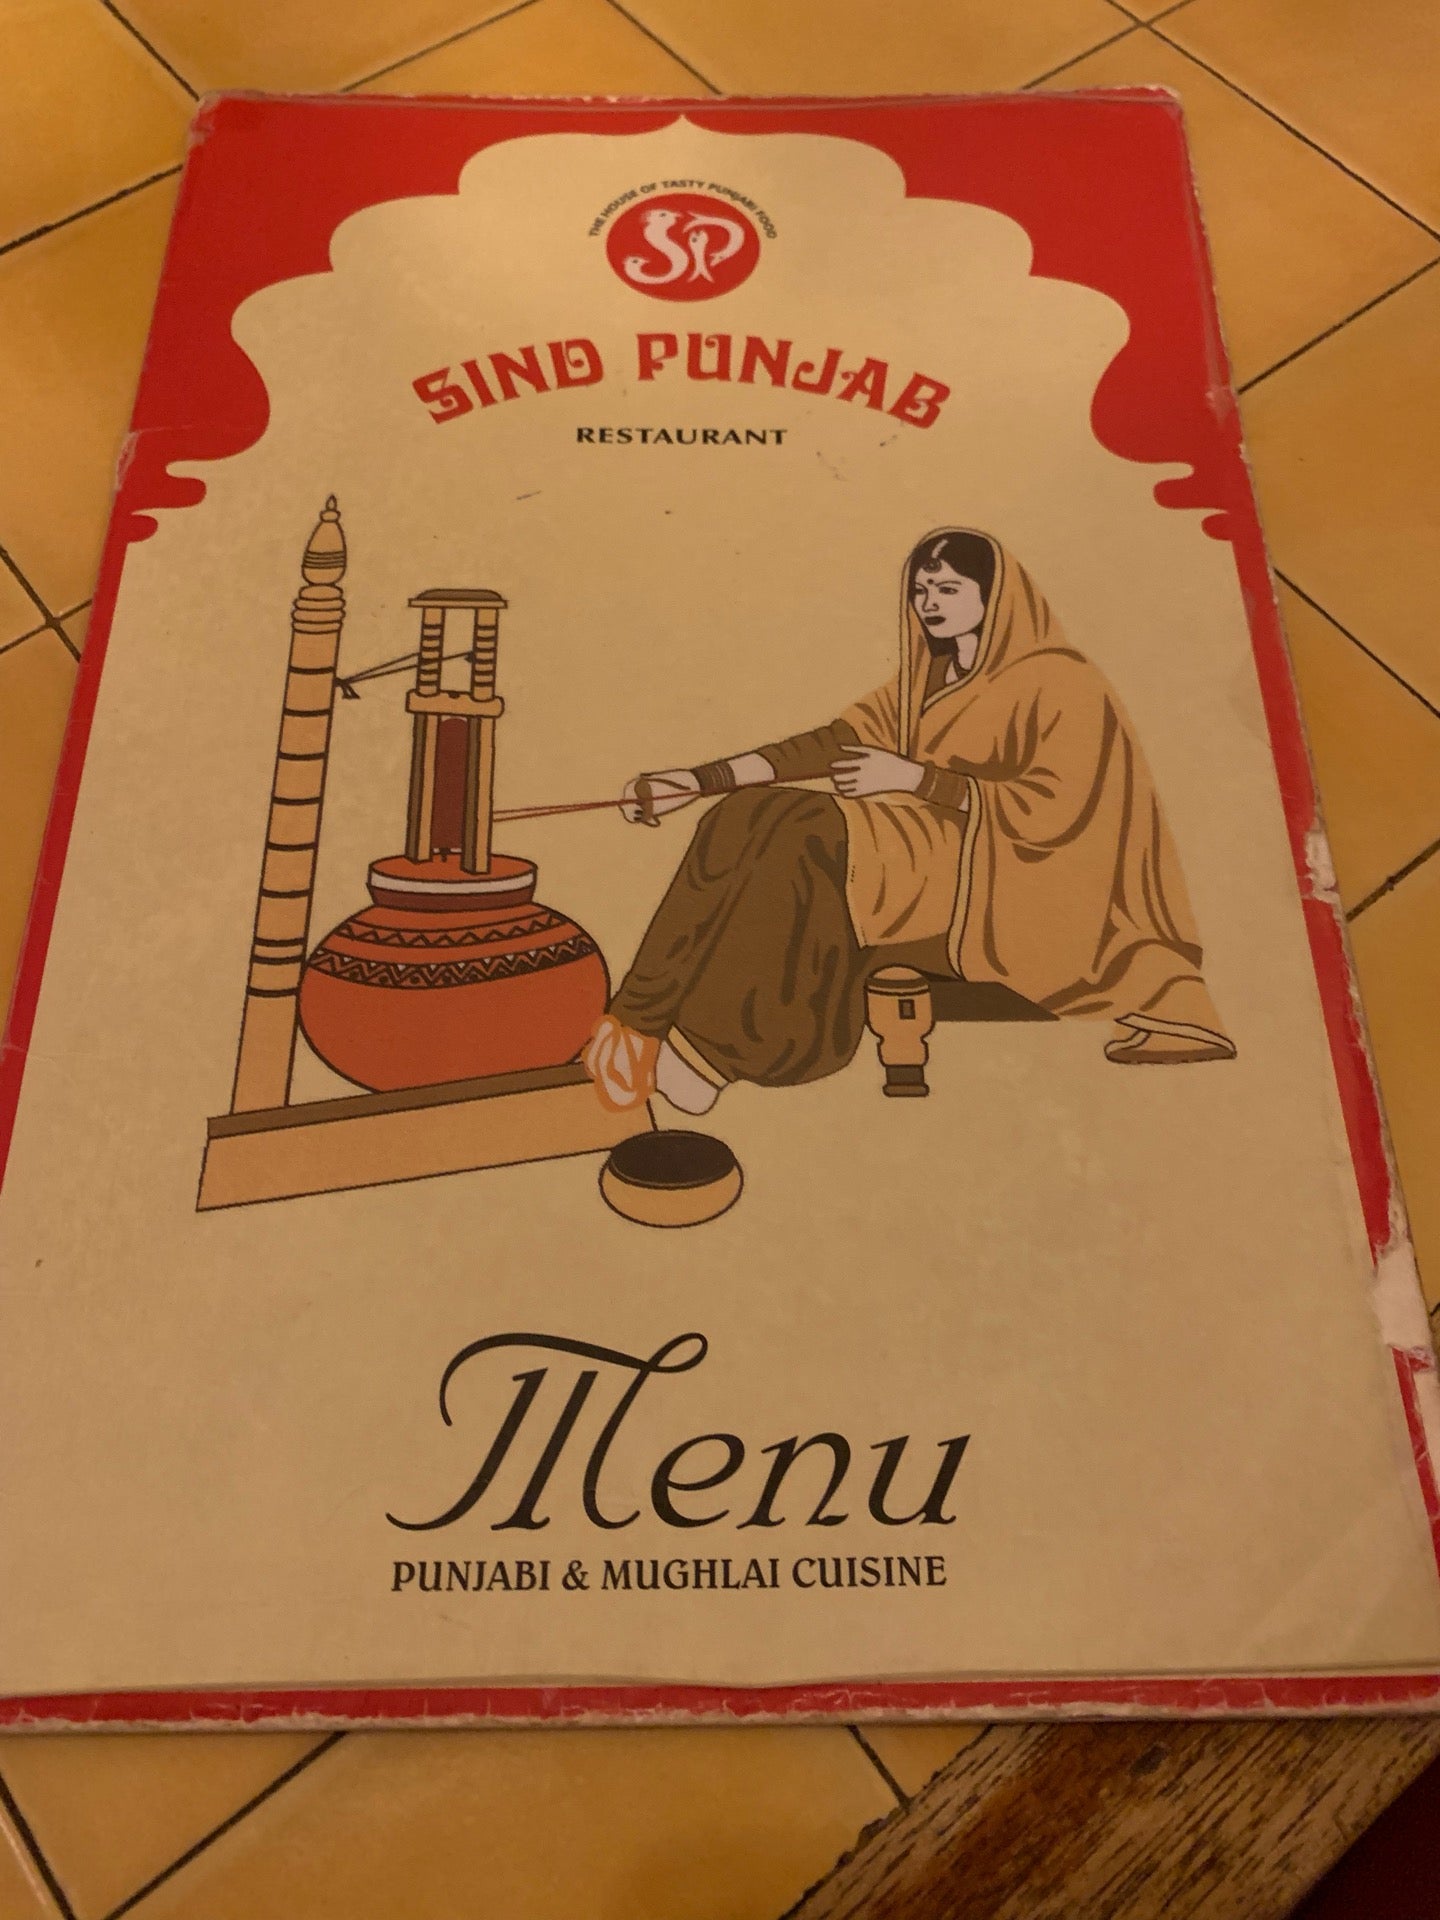 New Sind Punjab Restaurant